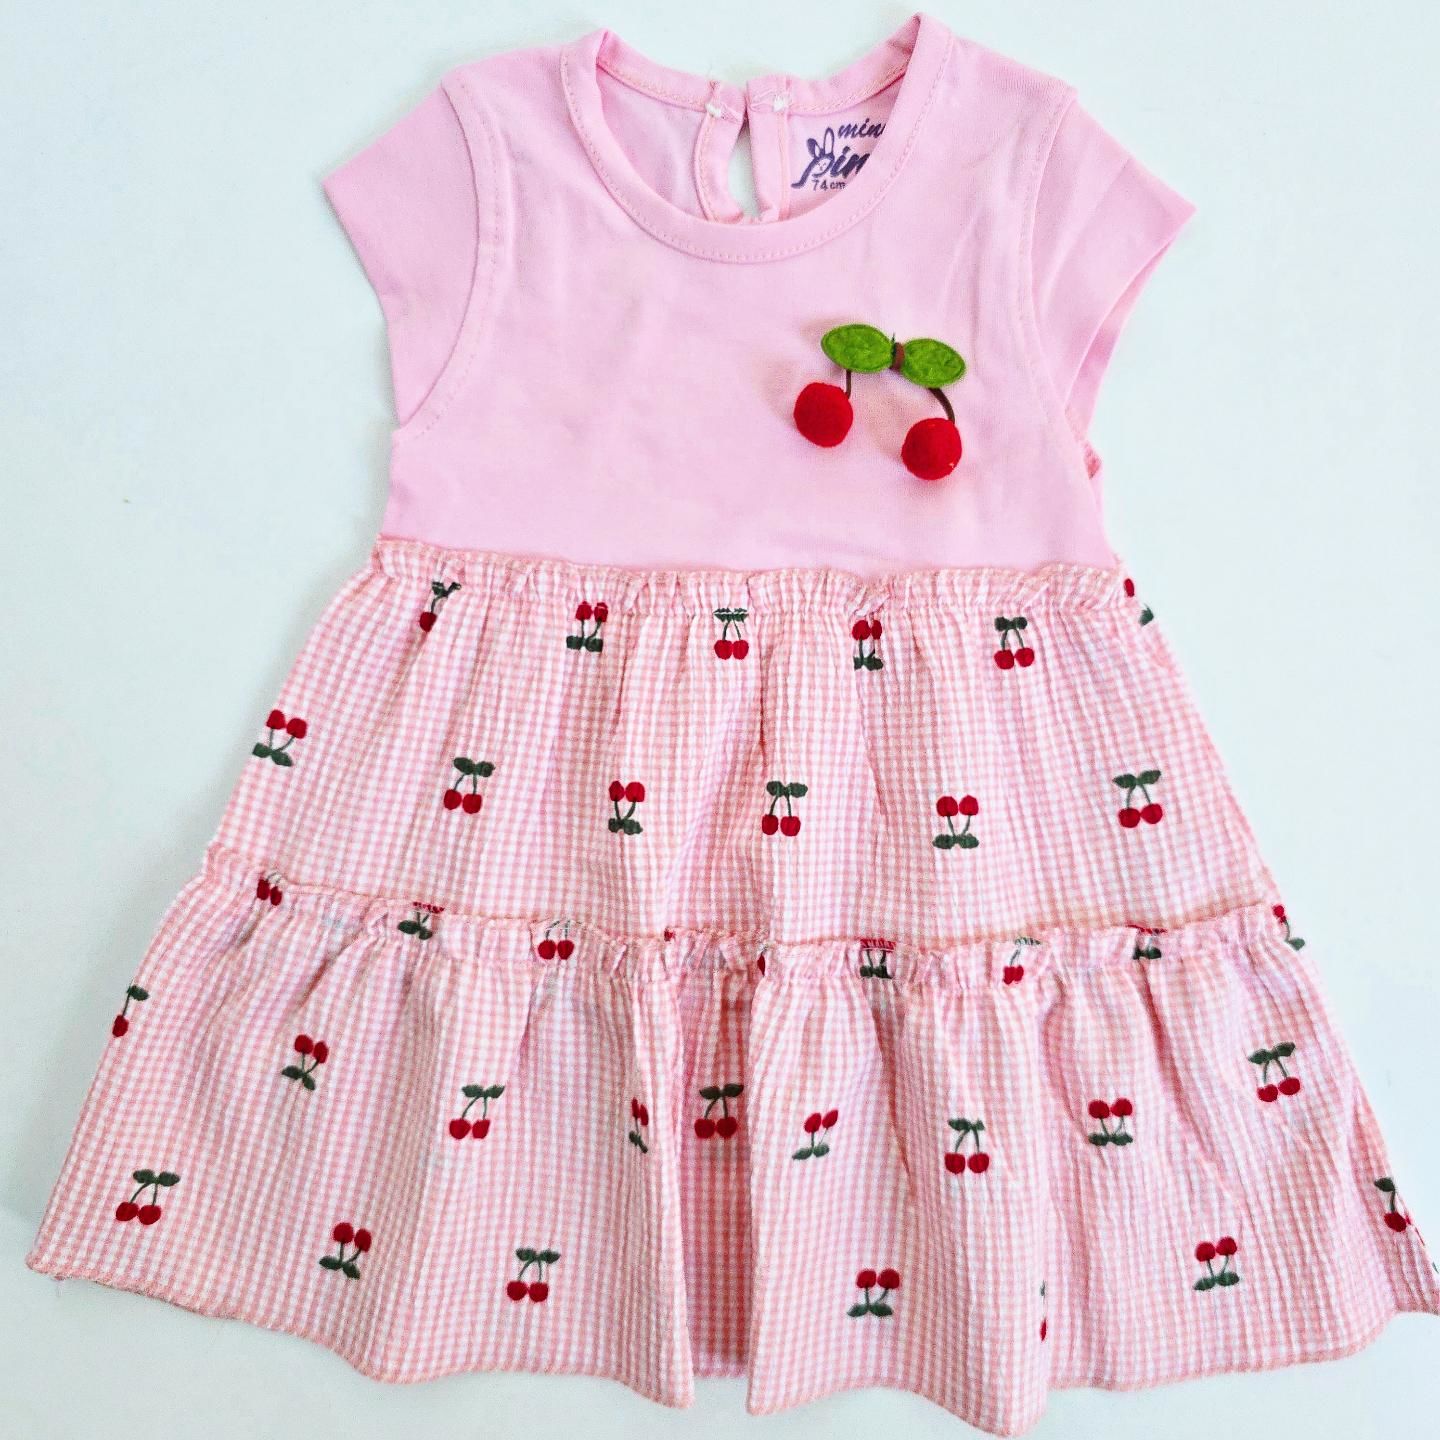 Minipink kids kirazlı elbise